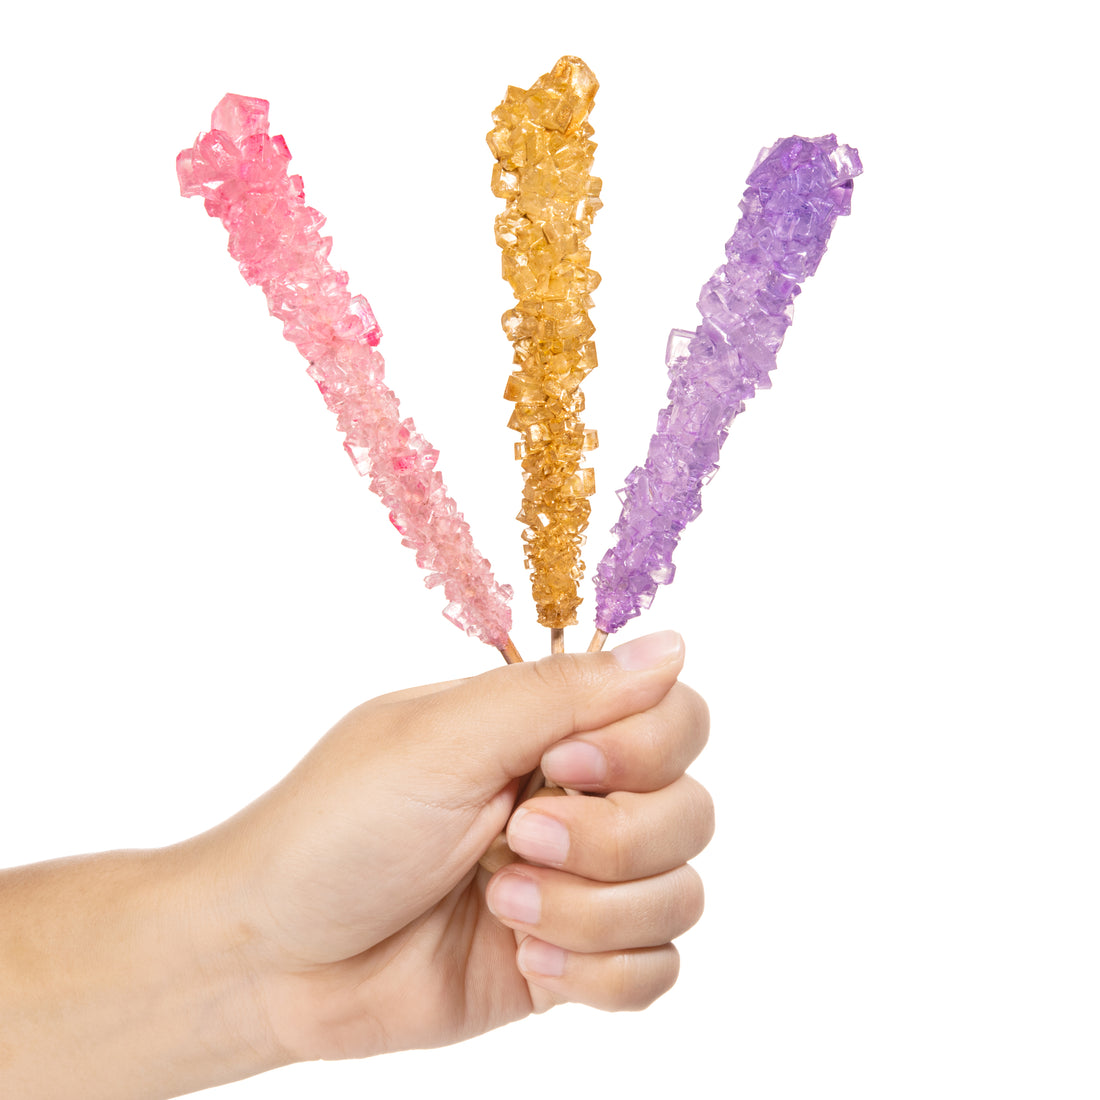 Princess Rock Candy Sugar Sticks